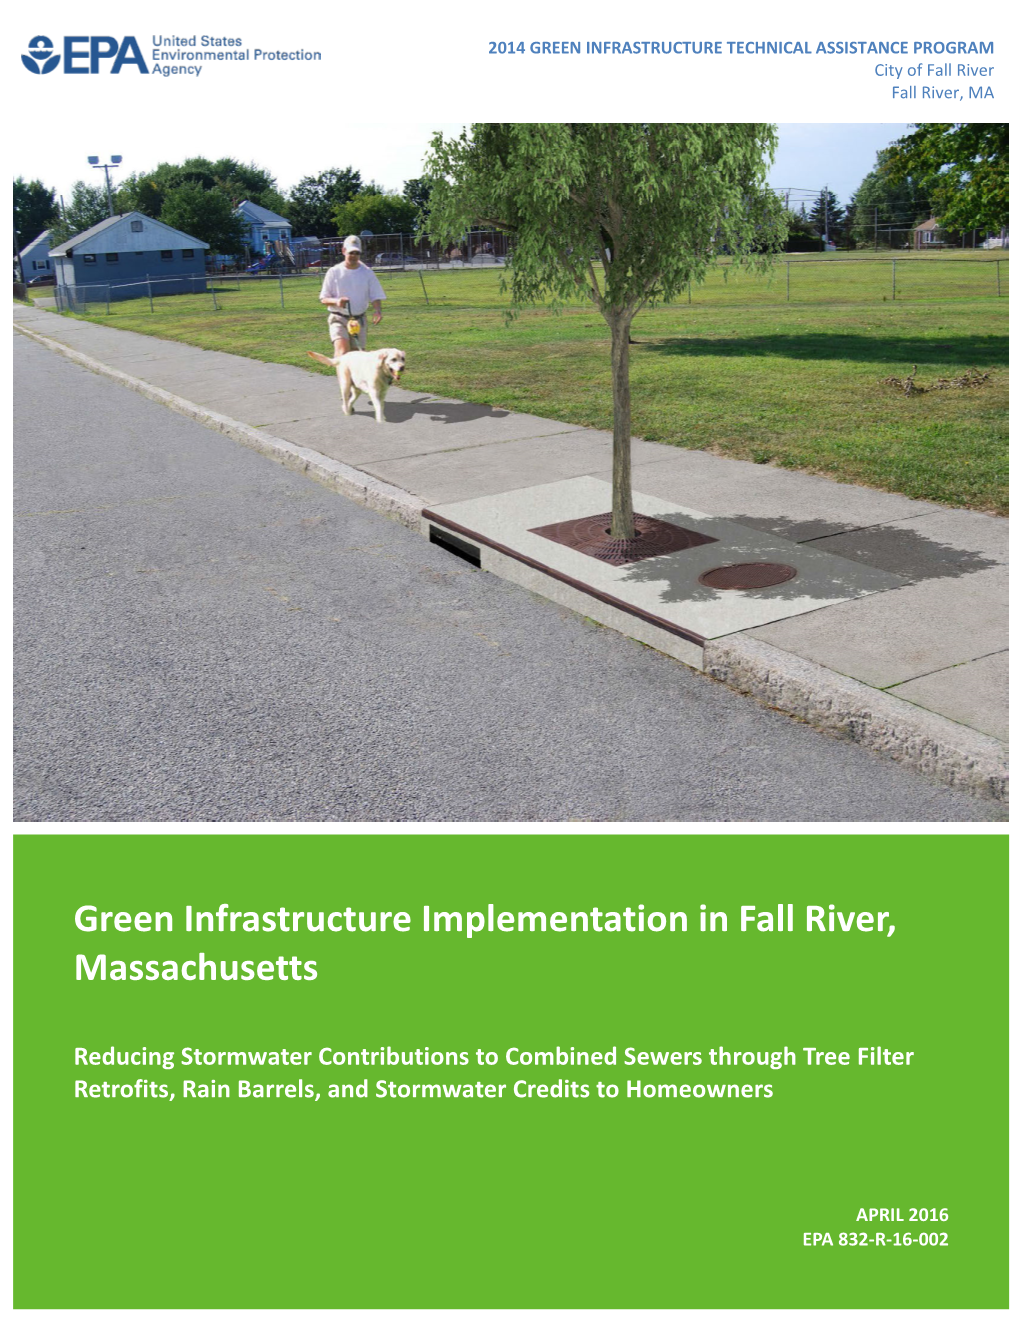 Green Infrastructure Implementation in Fall River, Massachusetts